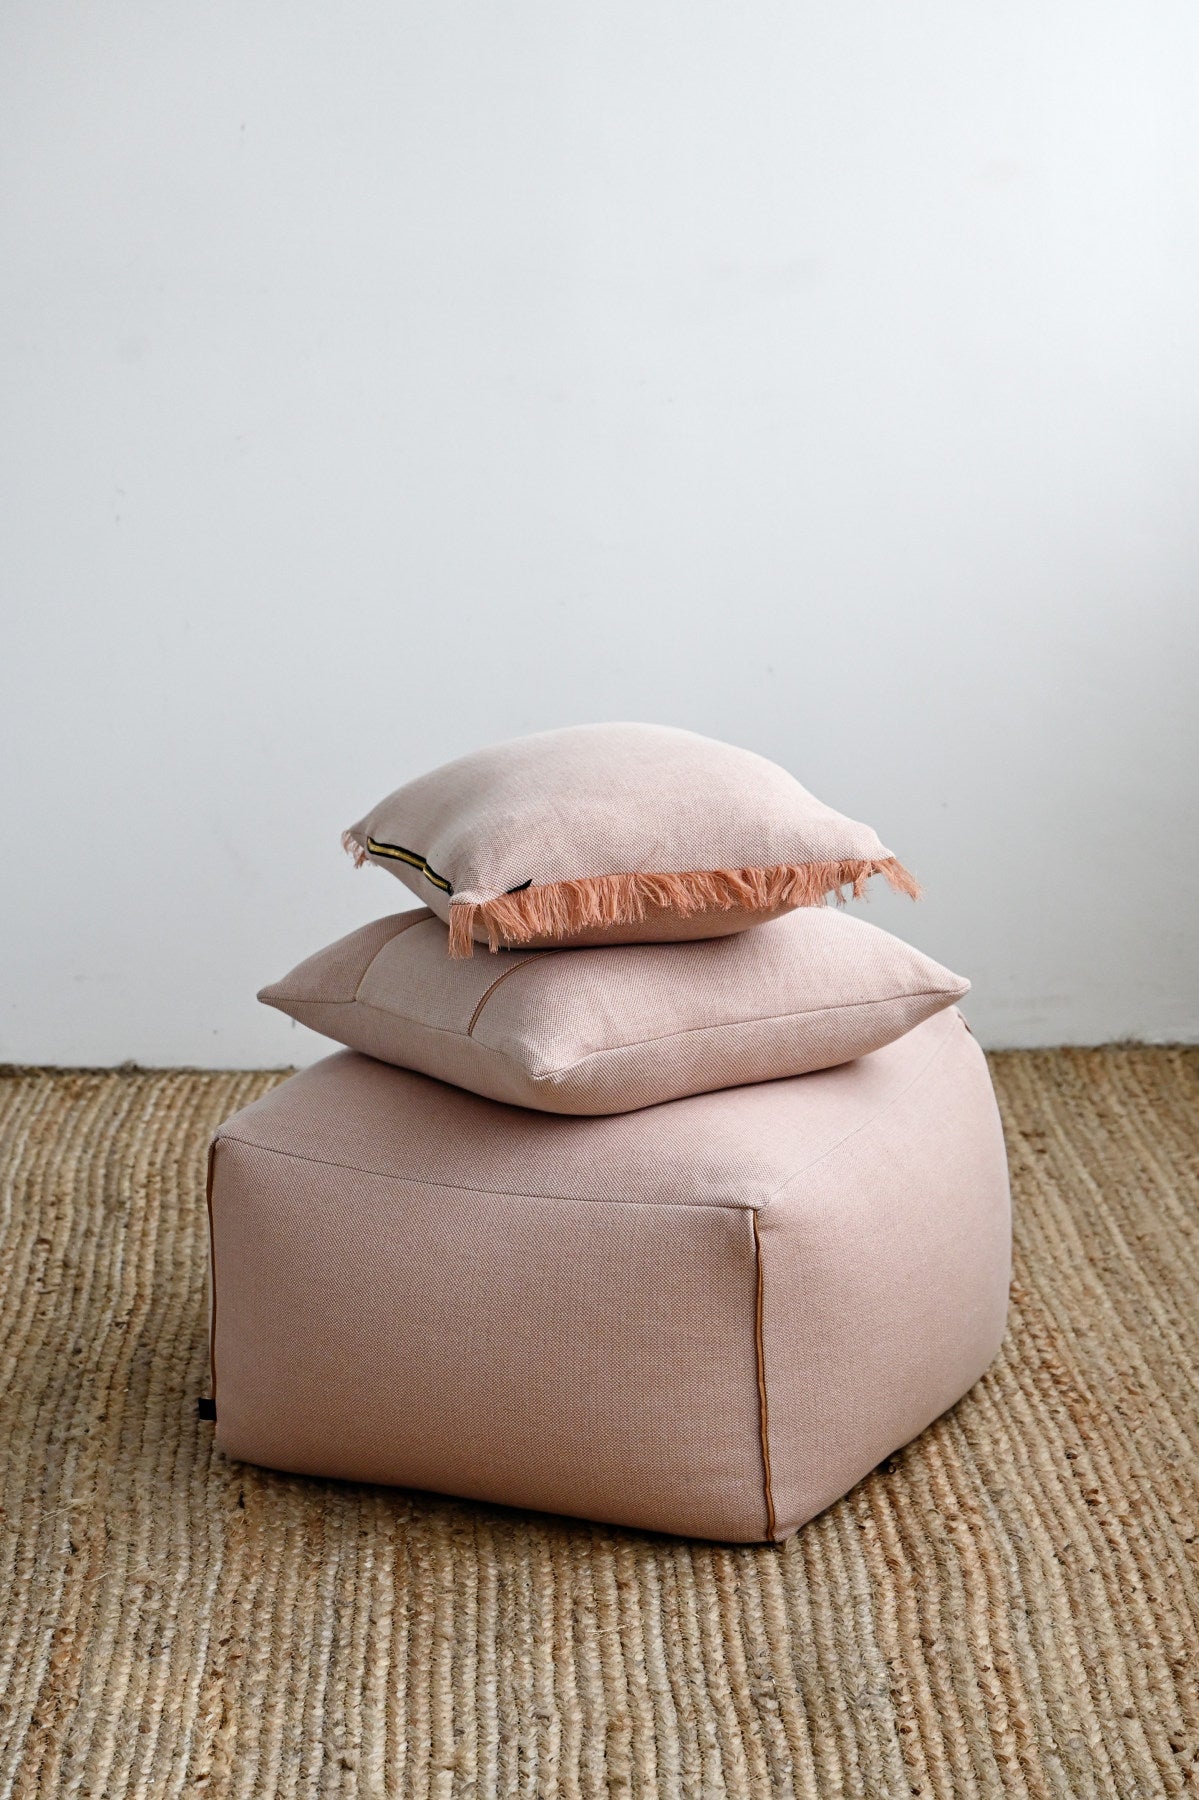 Blush Atlas Weave Square Cushion - 50cm x 50cm